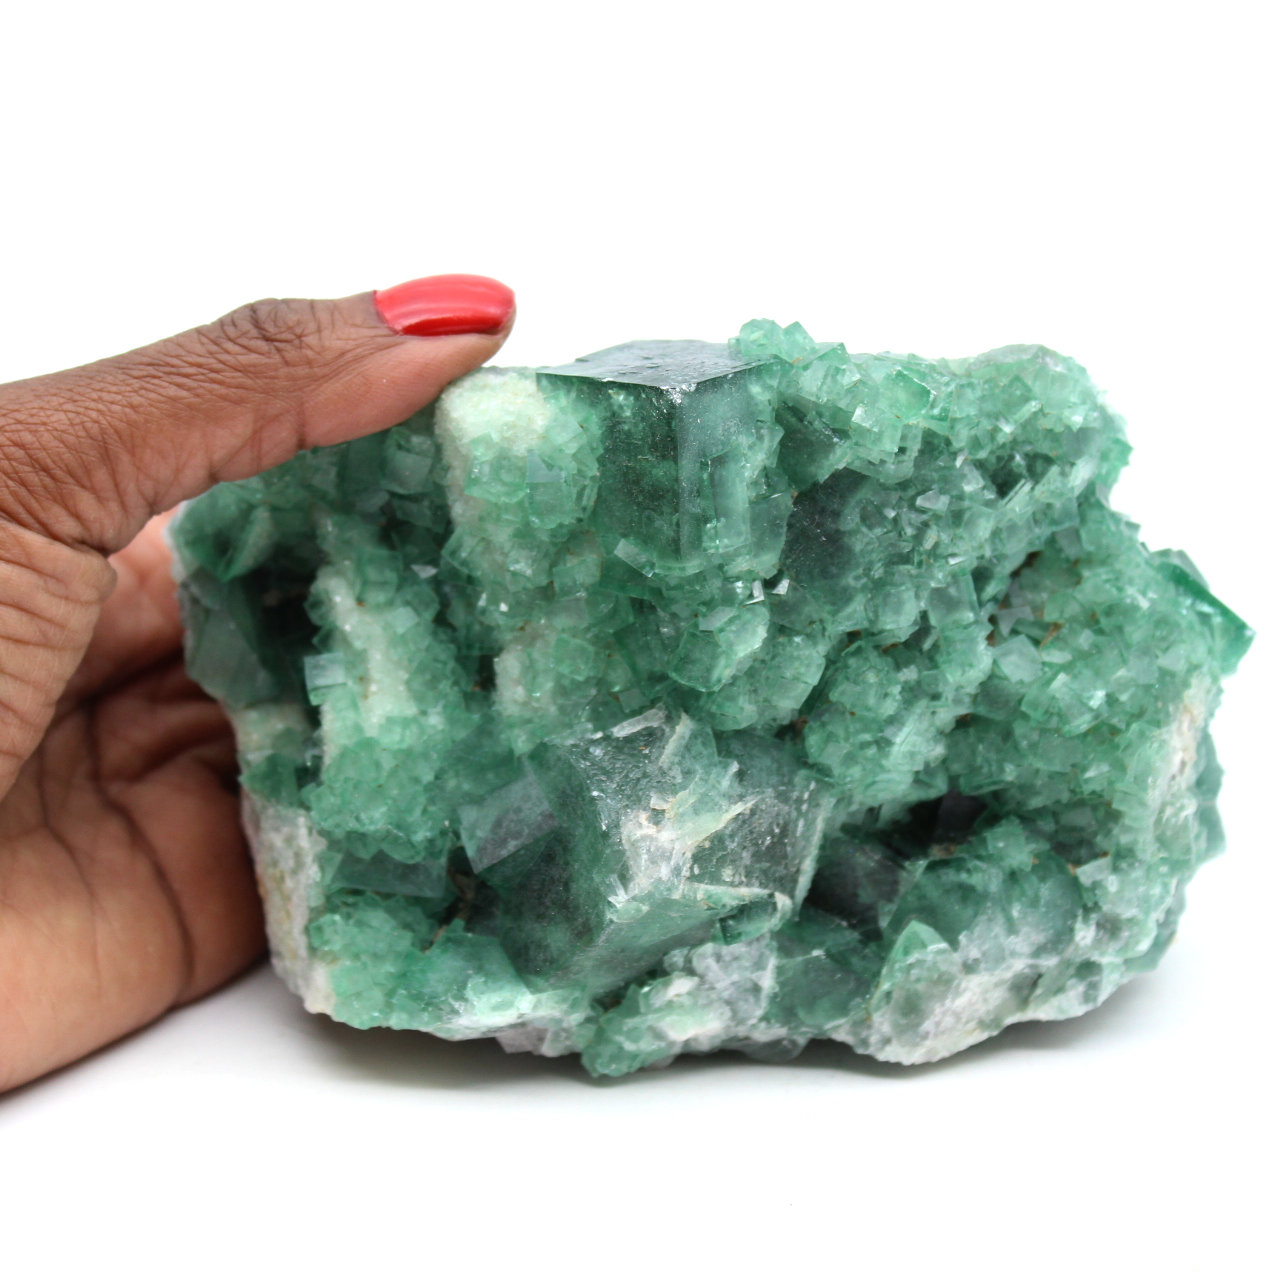 Cristales de fluorita verde natural sin procesar